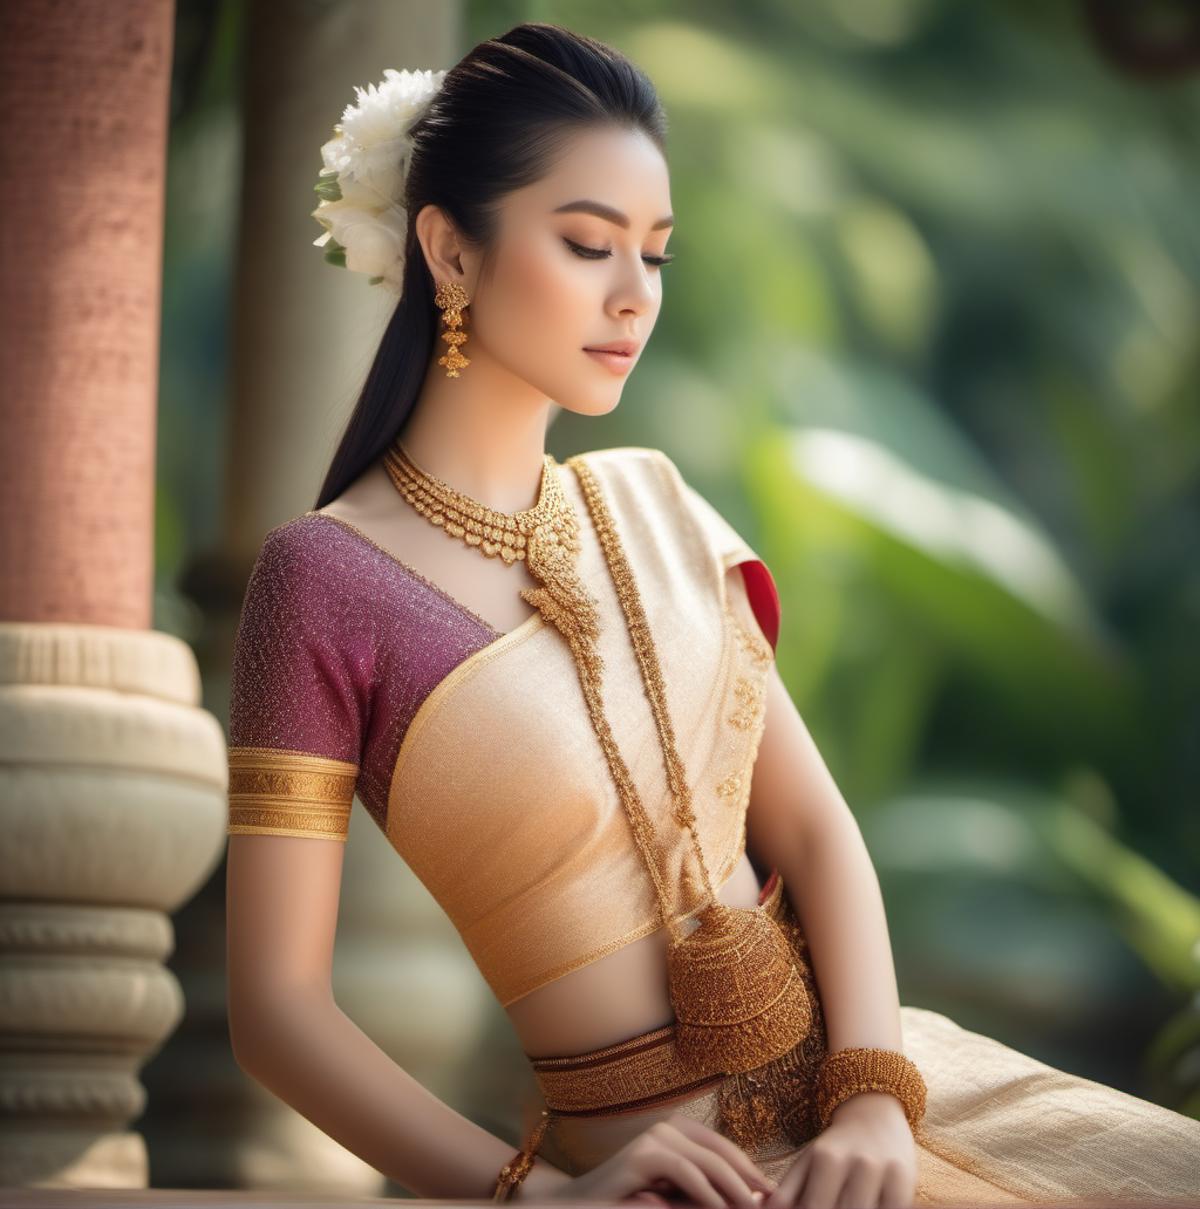 Thai Dress XL image by PureFxAi